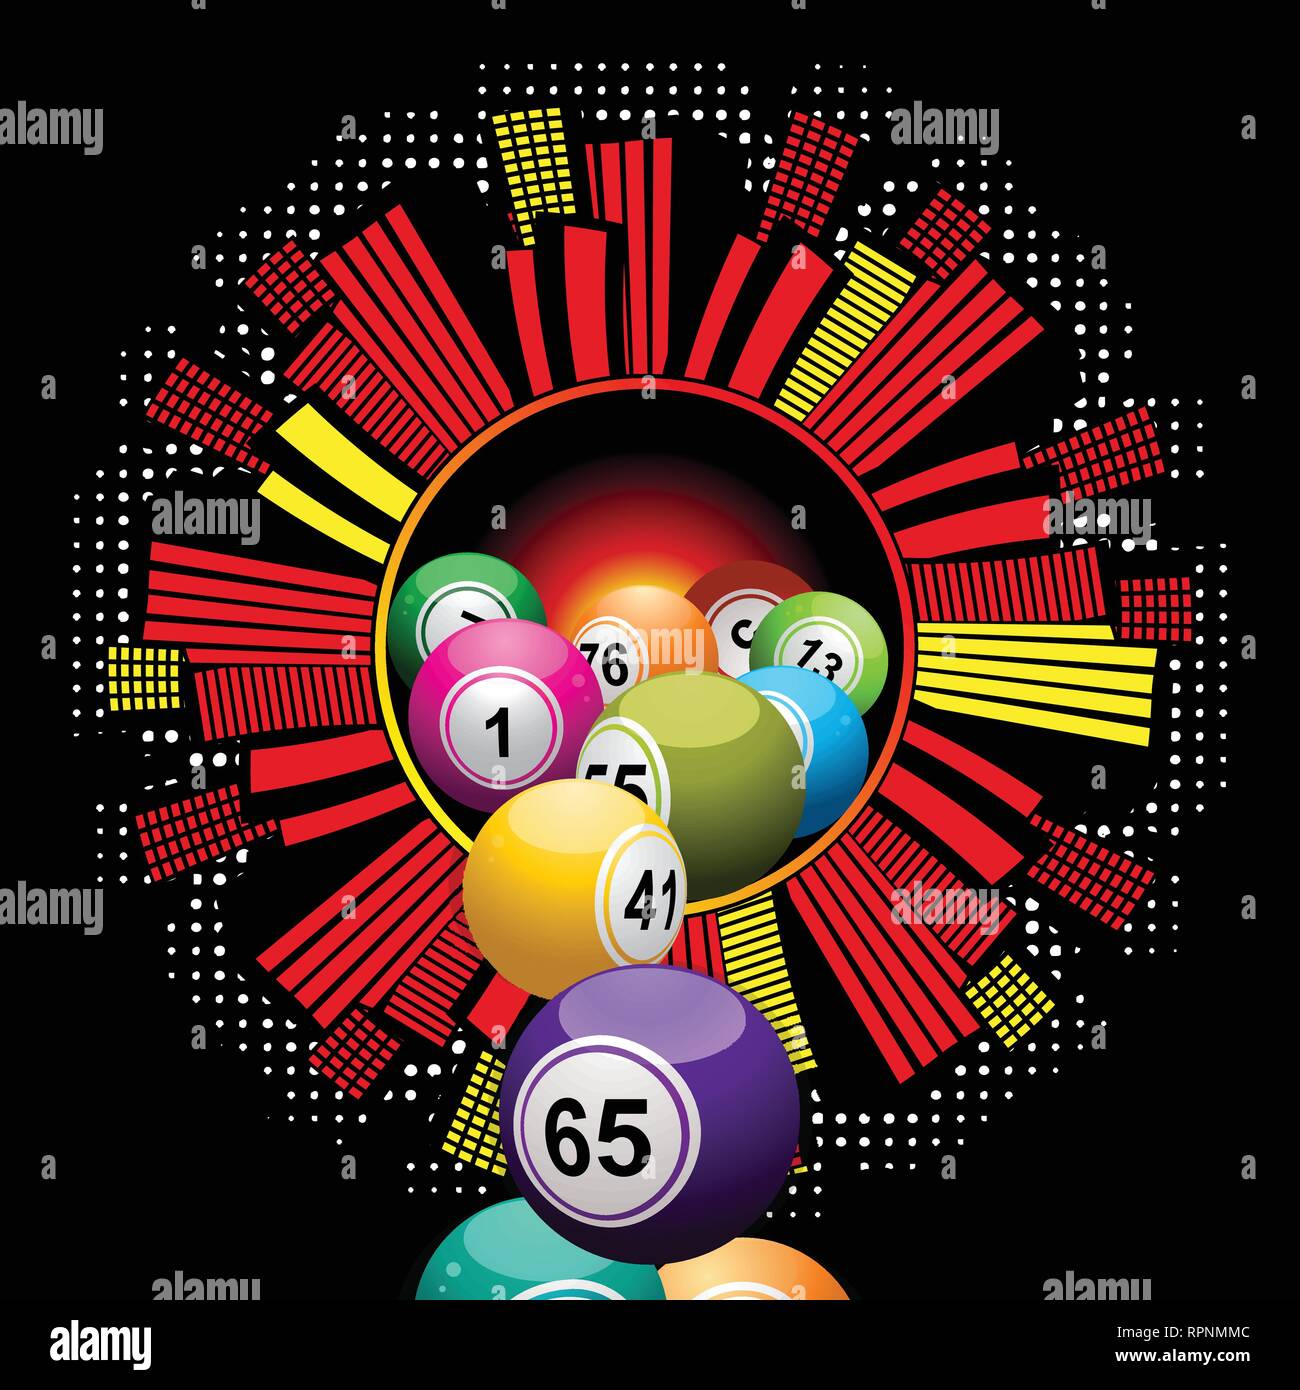 Bingo Lottery Balls Falling From a Cartoons Style Cityscape Circular Border Over Black Background Stock Vector